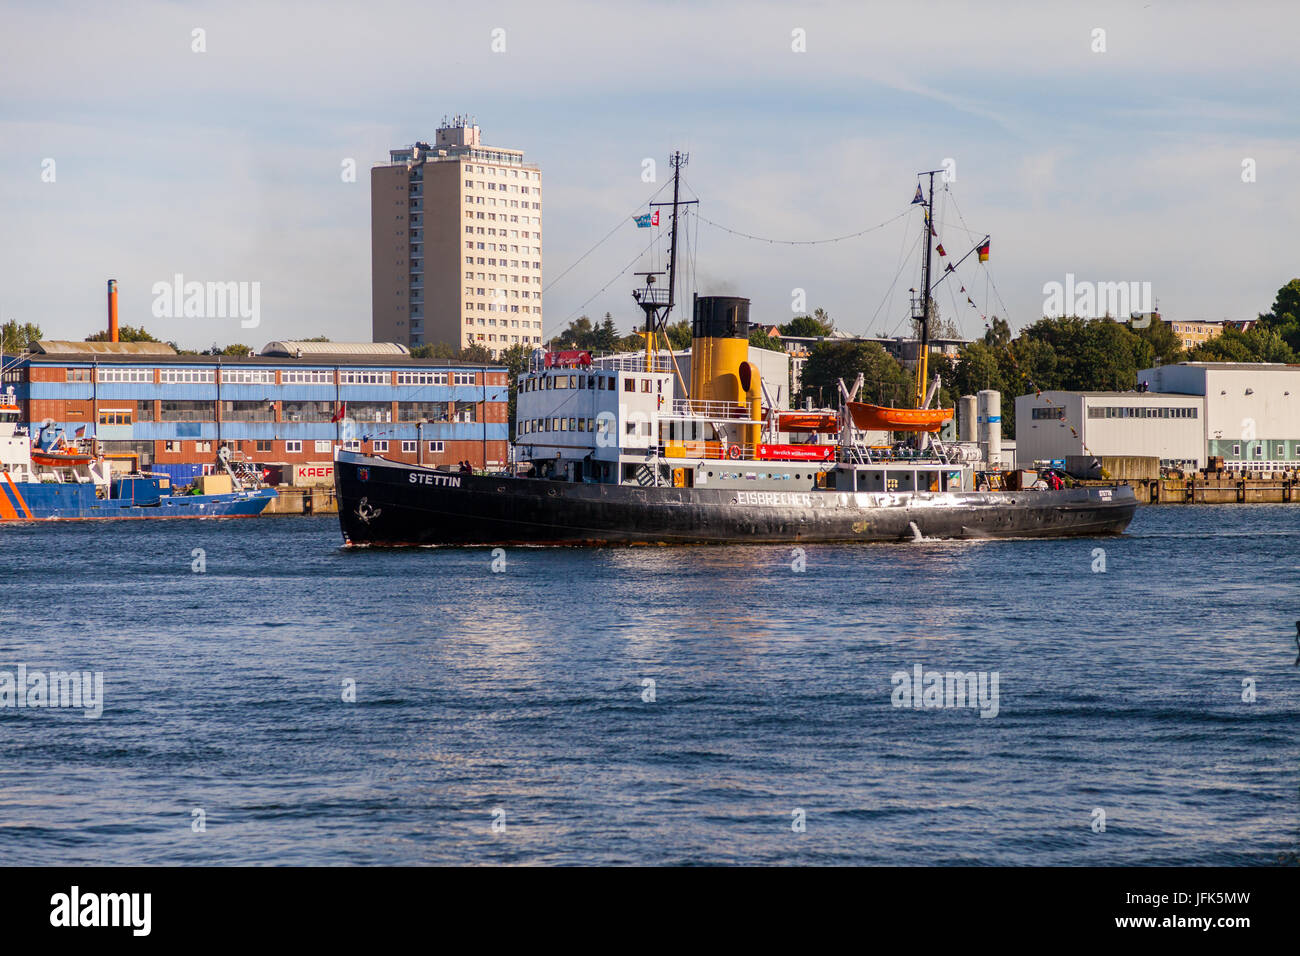 KIEL / GERMANY - JUNE 20, 2017: german steam icebreaker Stettin drives through the water at public event Kieler Woche. Stock Photo